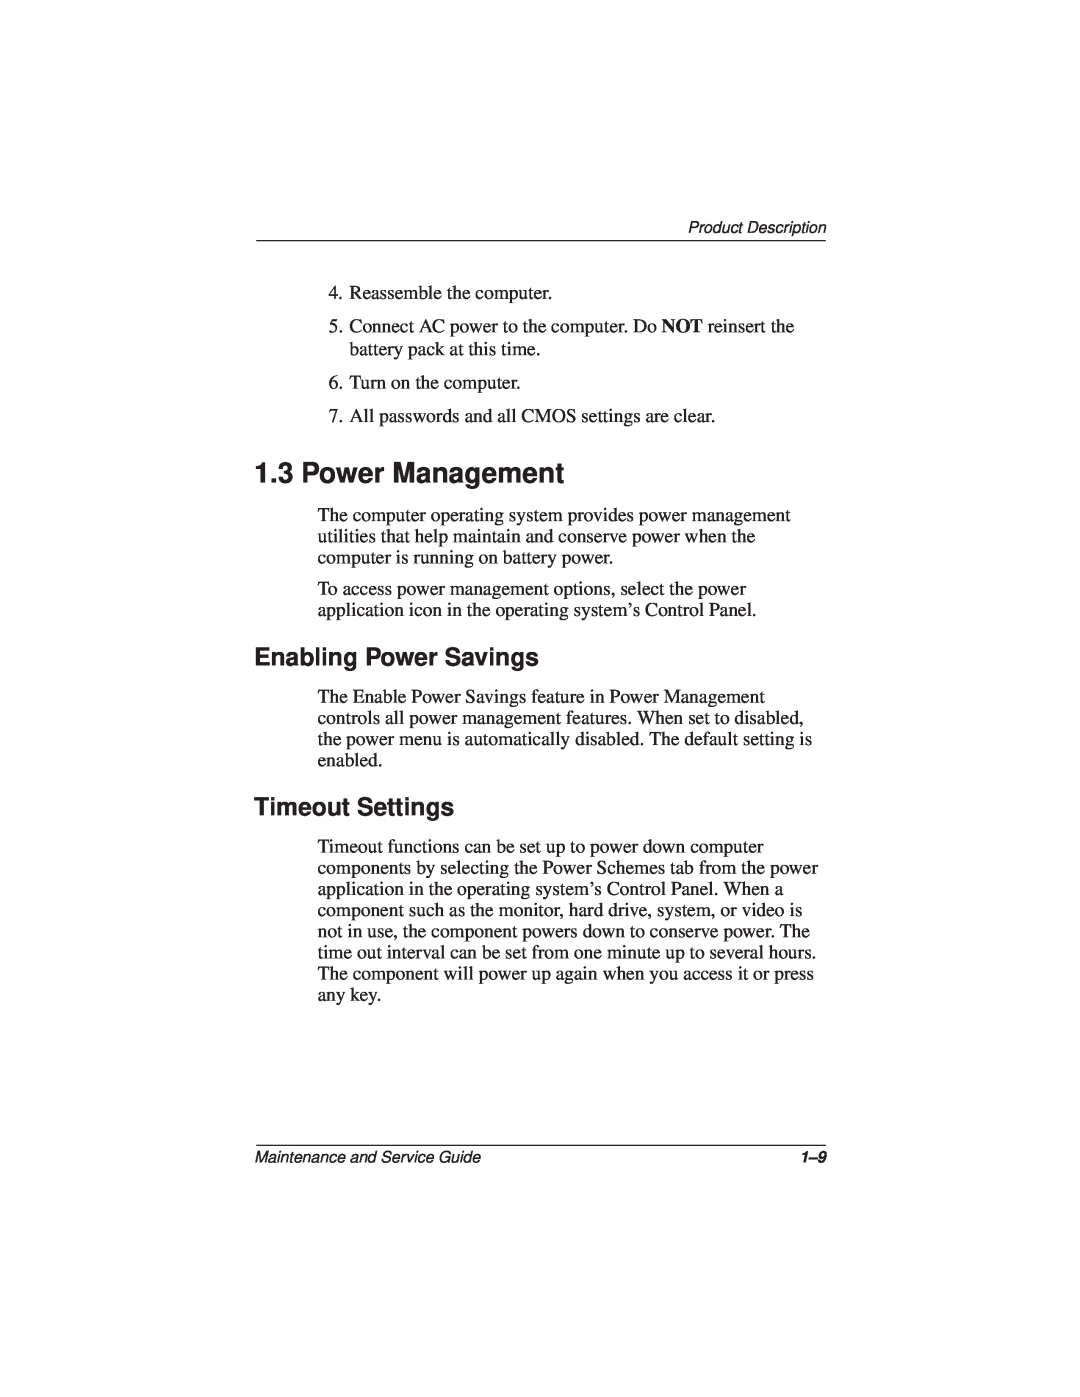 Compaq N110 manual Power Management, Enabling Power Savings, Timeout Settings 